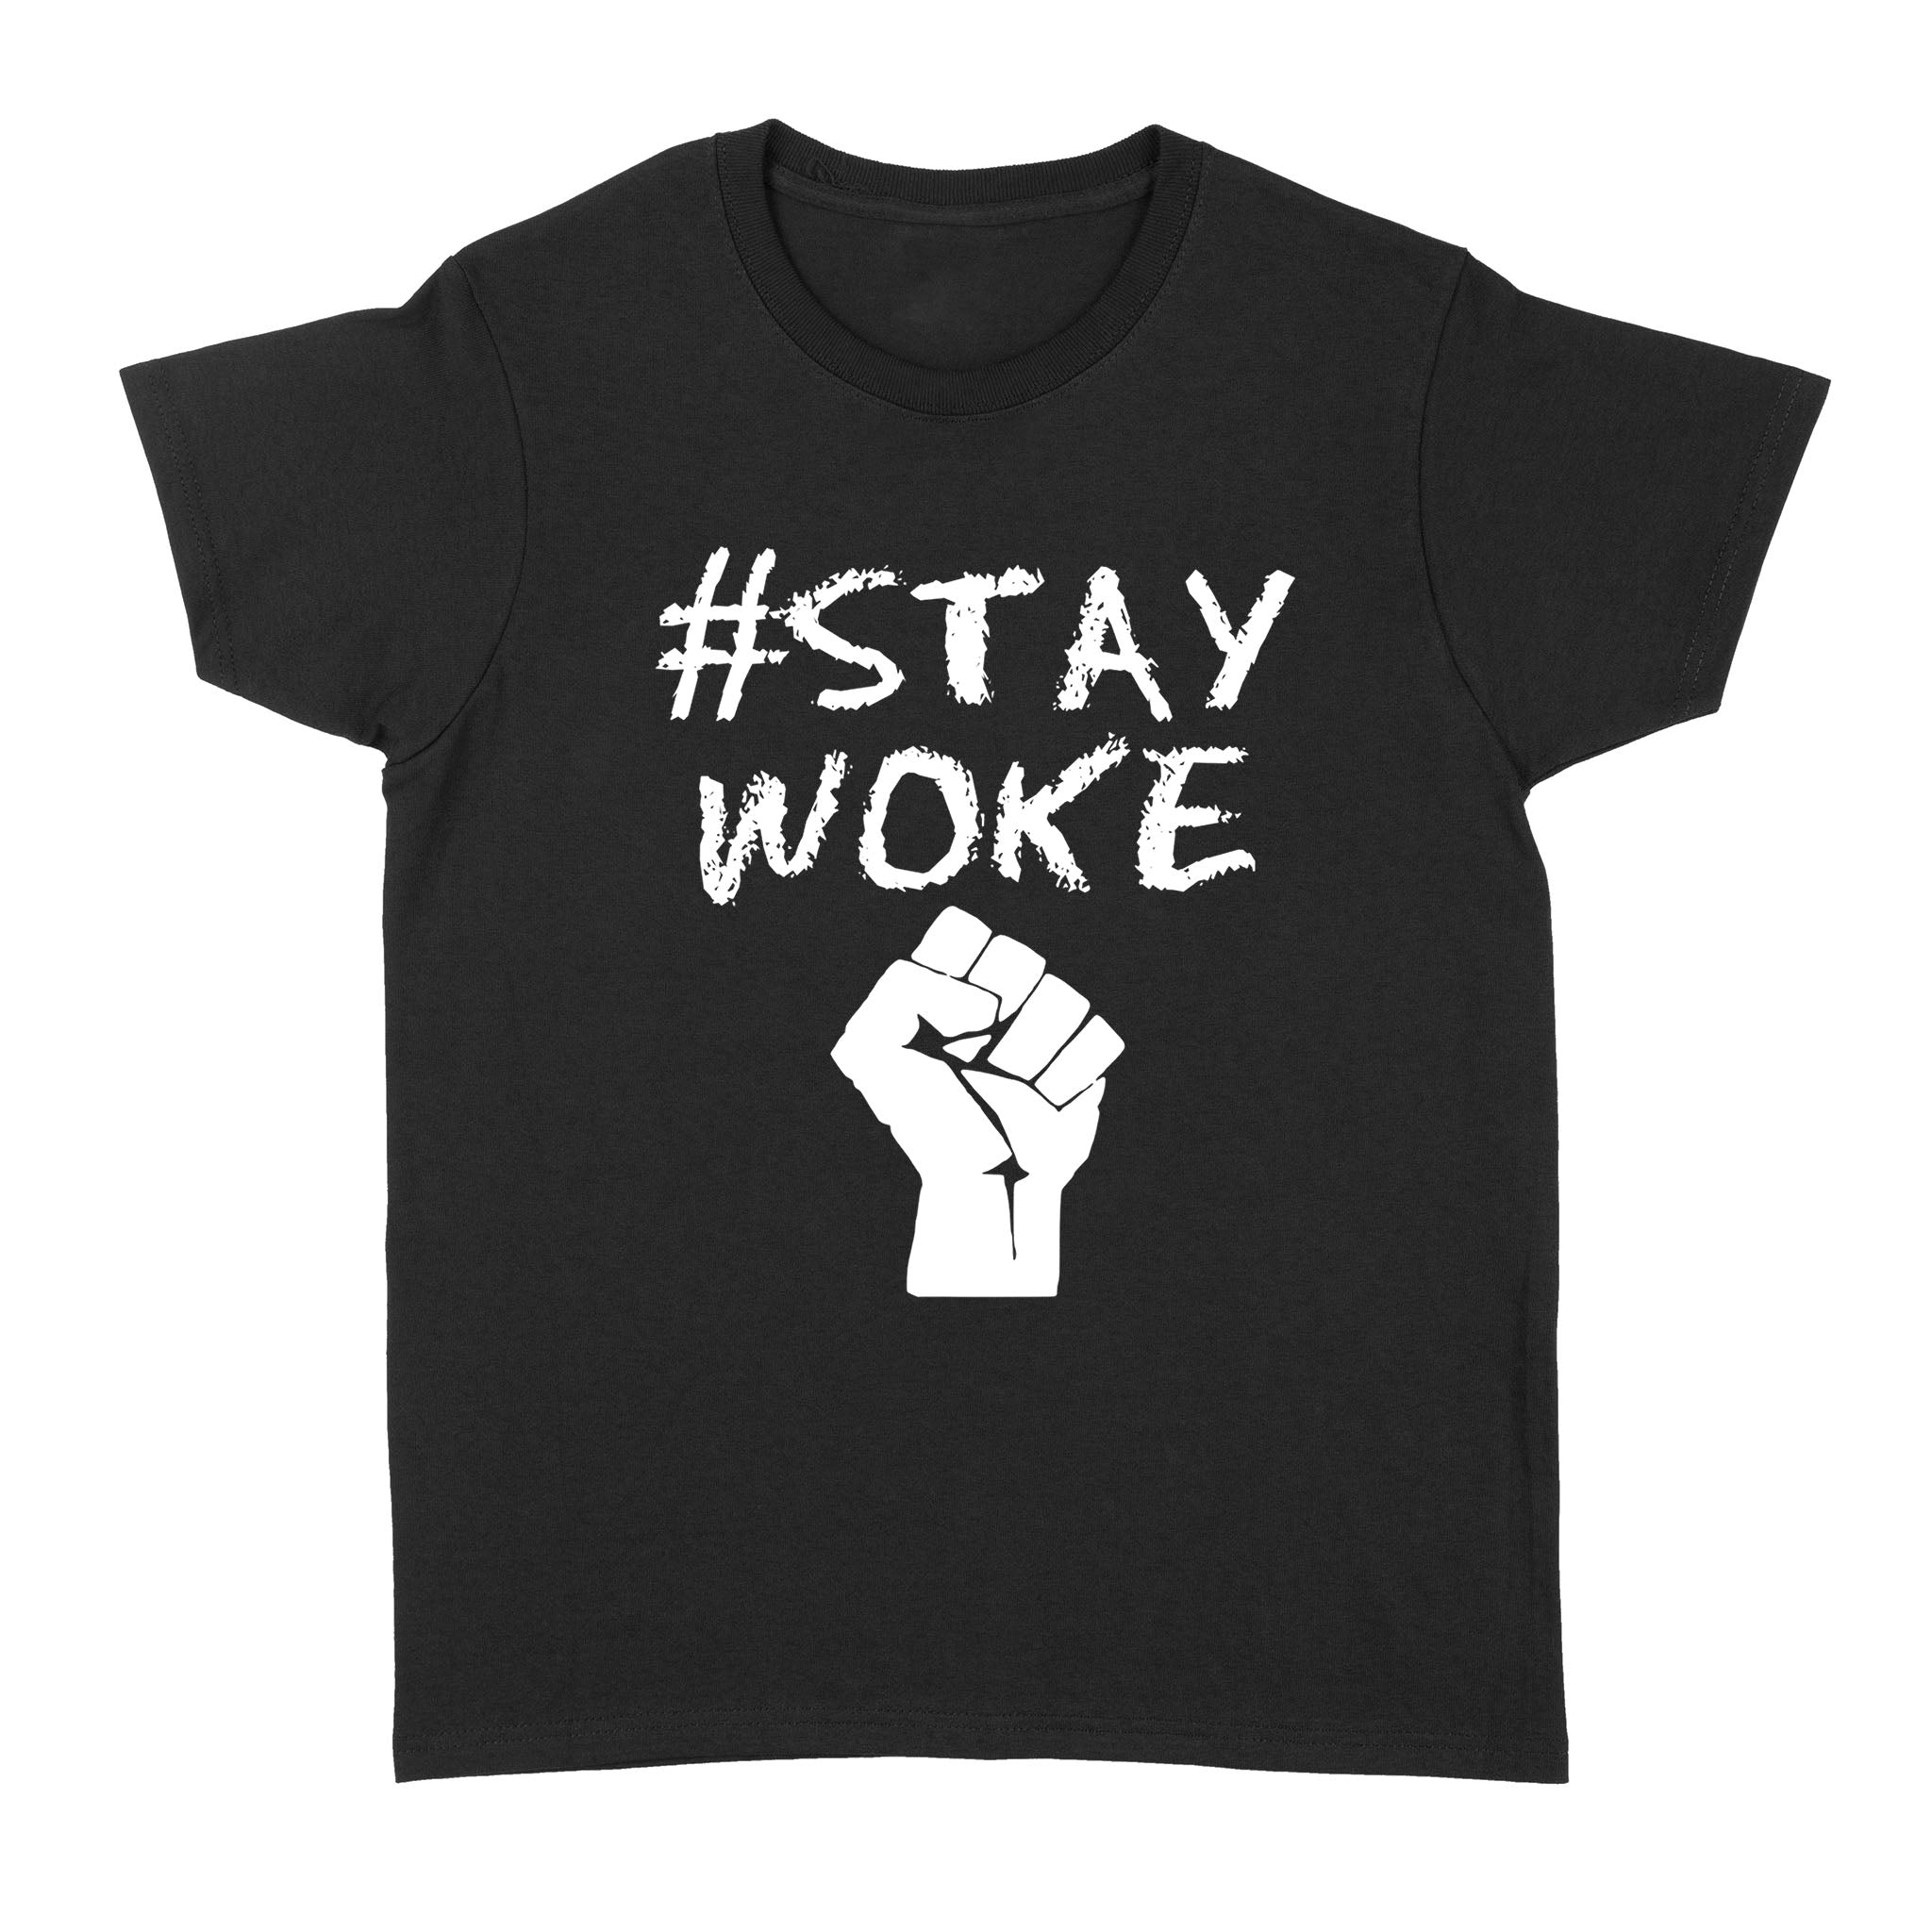 Hashtag stay woke shirt - #Stay woke - Standard Women's T-shirt